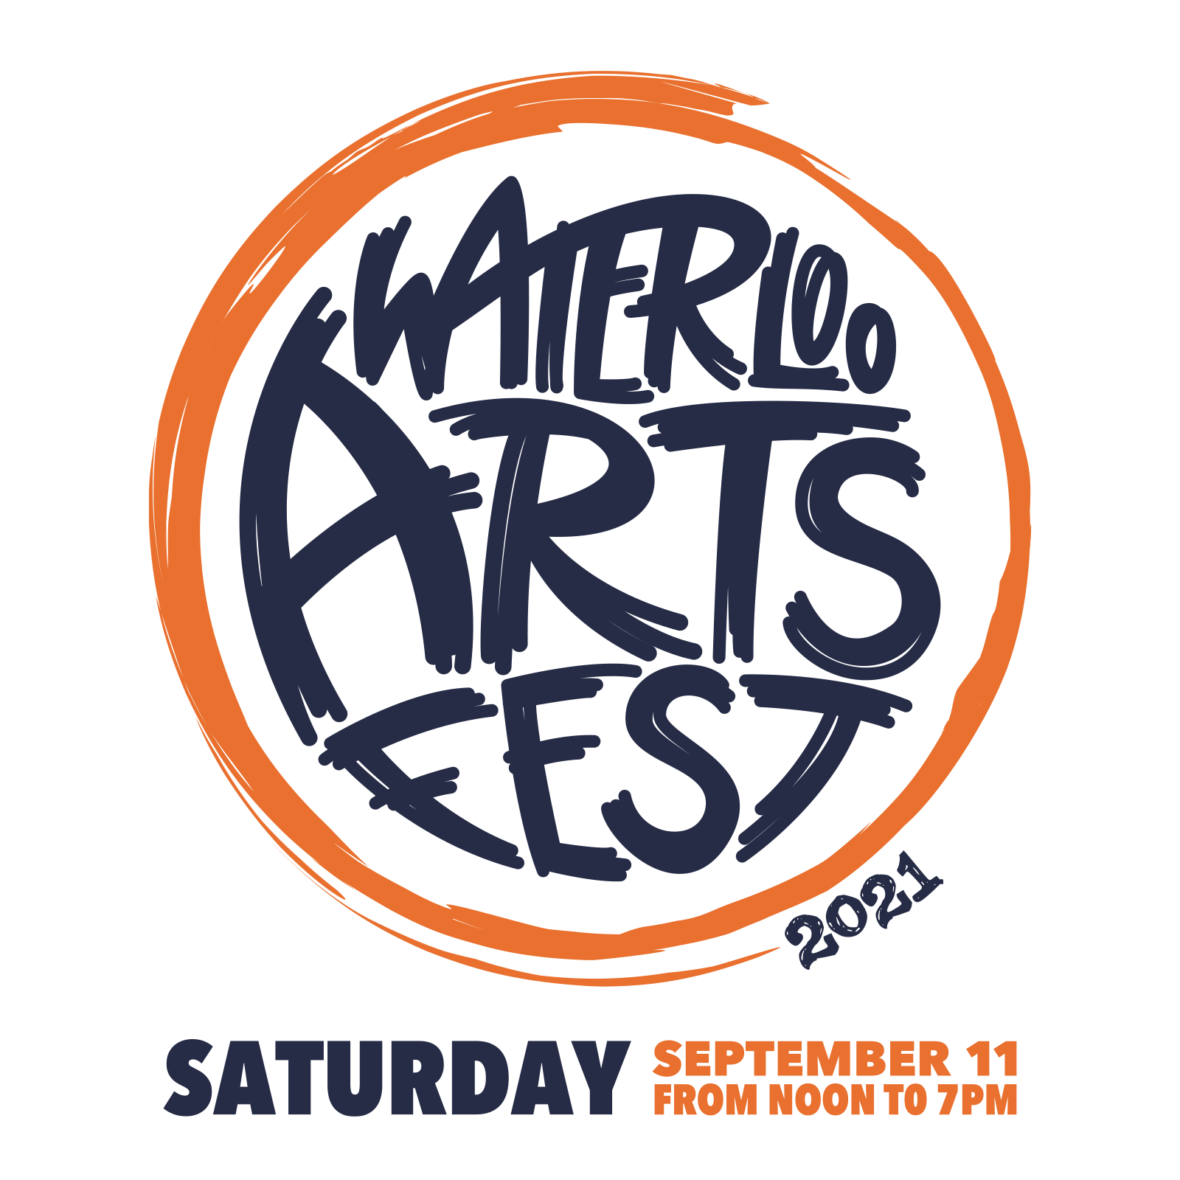 2021 Waterloo Arts Fest Waterloo Arts